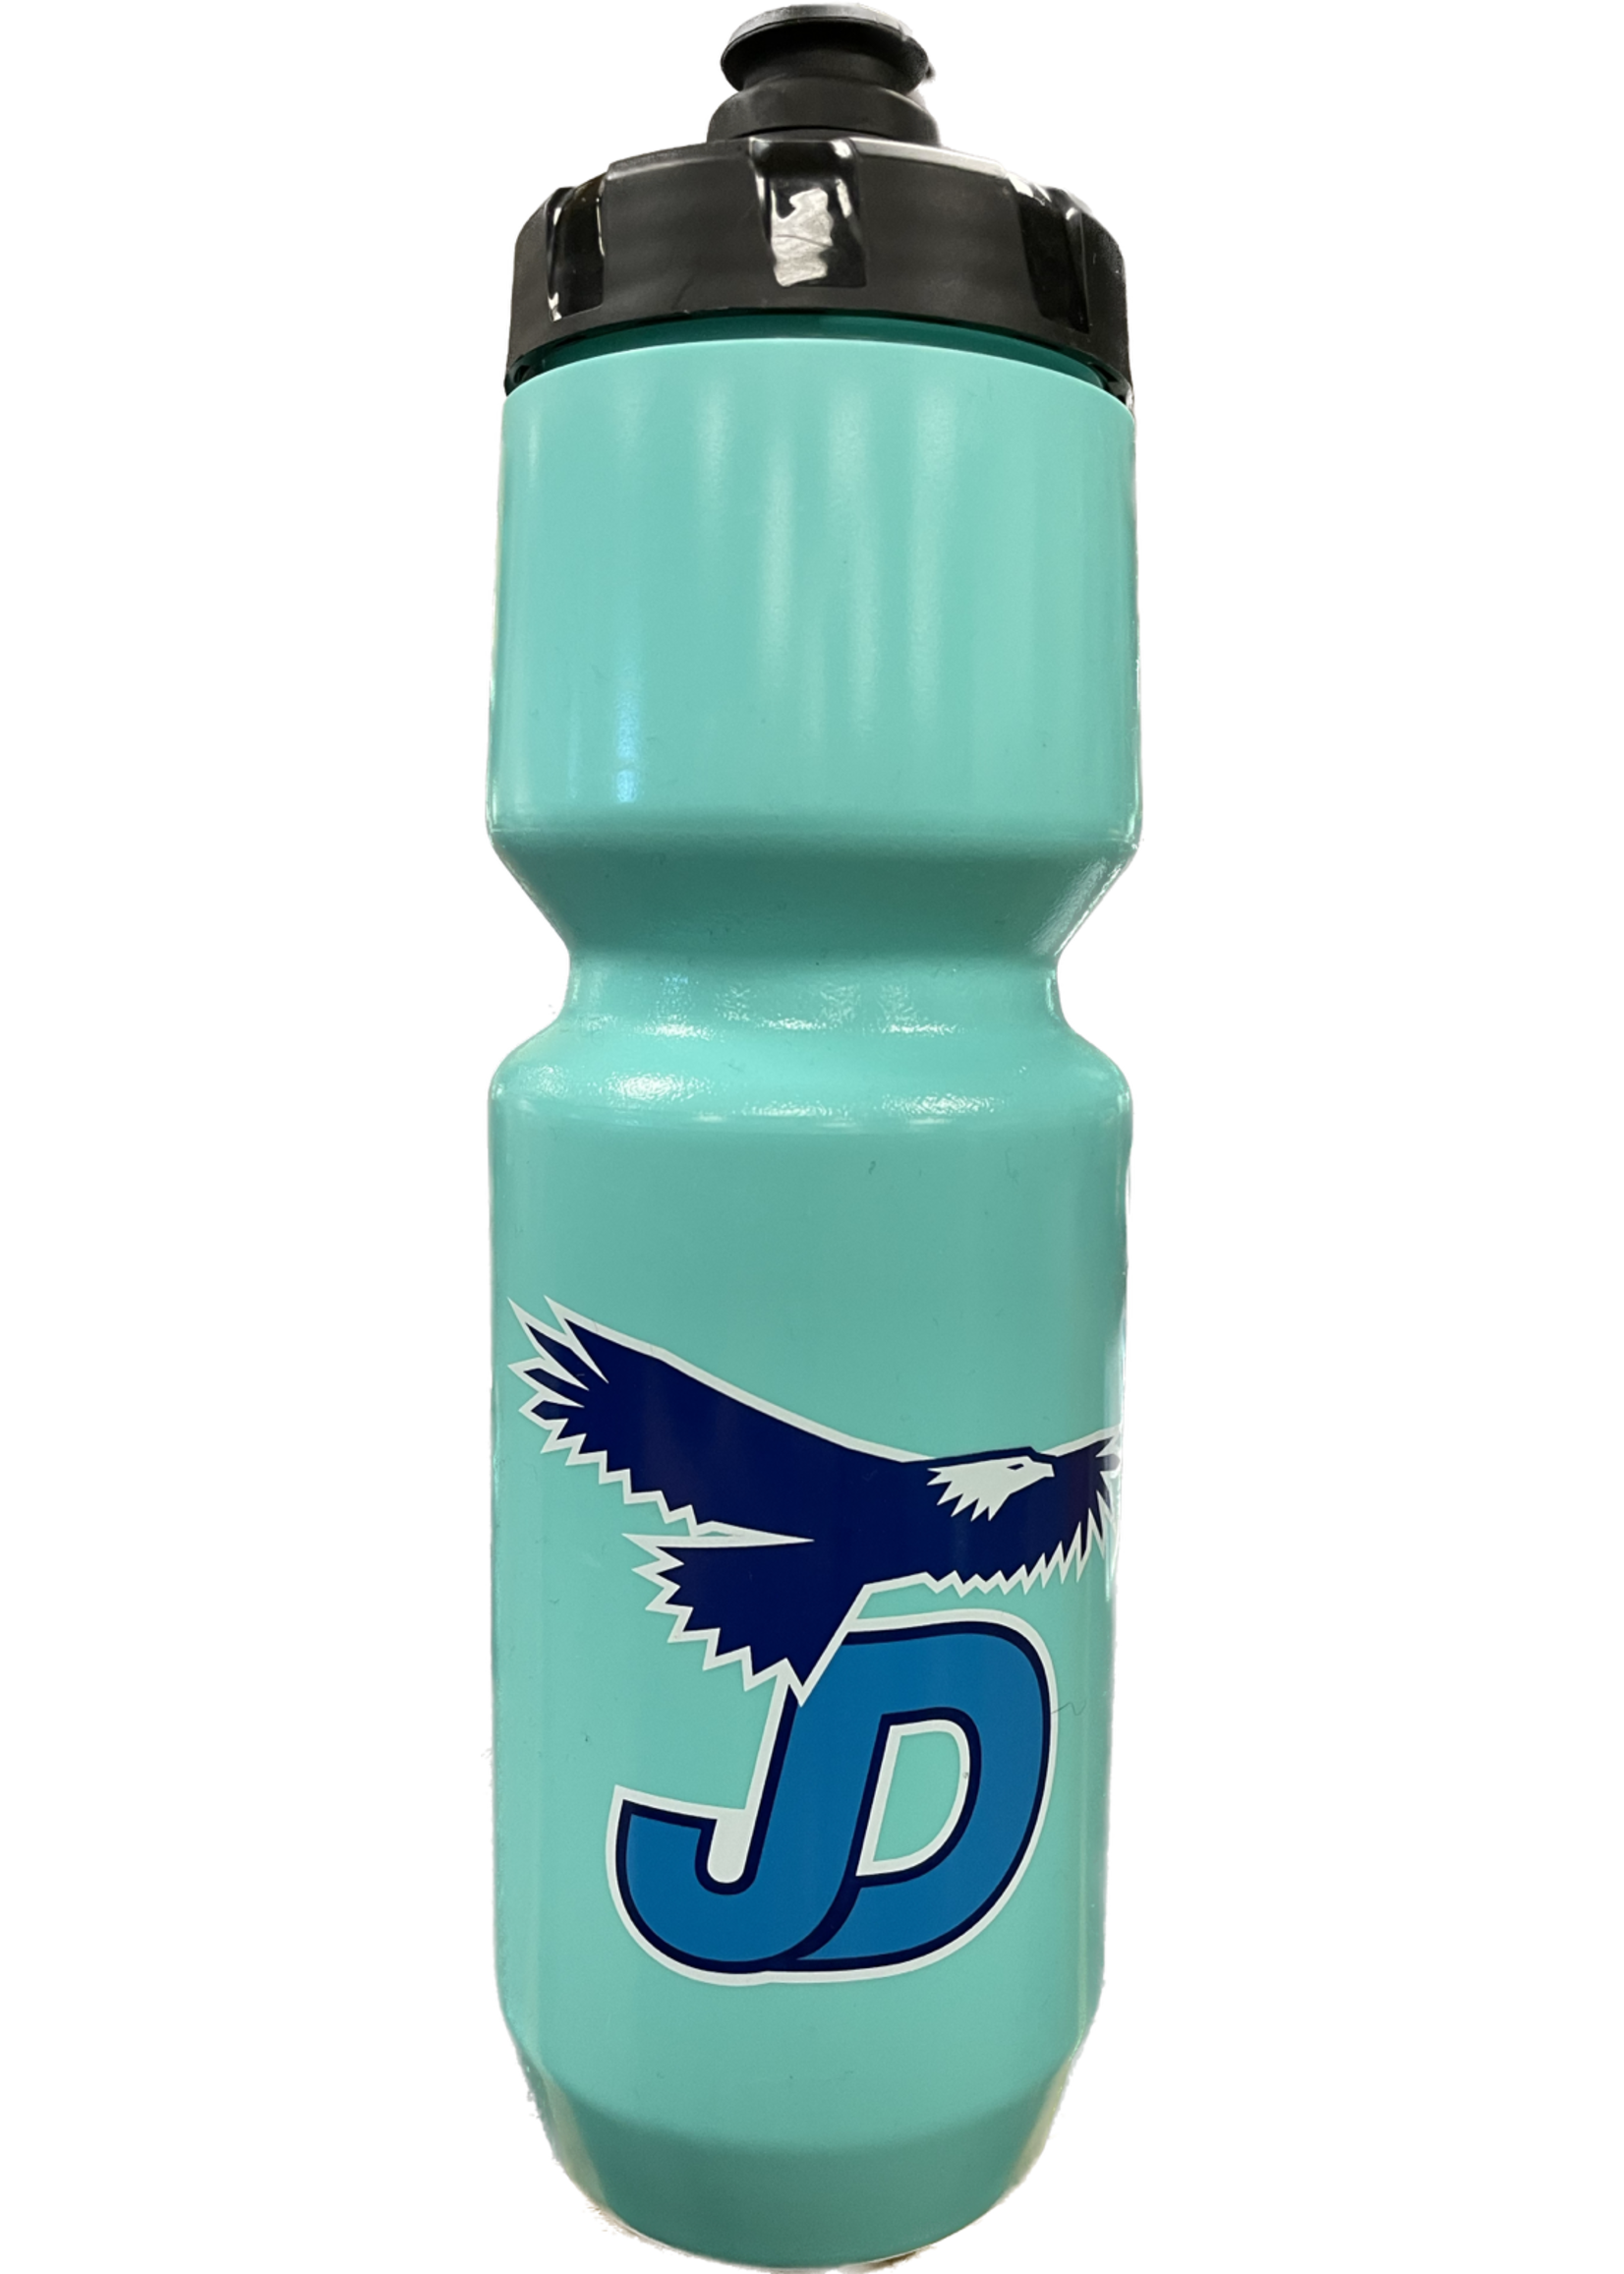 NON-UNIFORM Beverage - JD Water bottle, turquoise